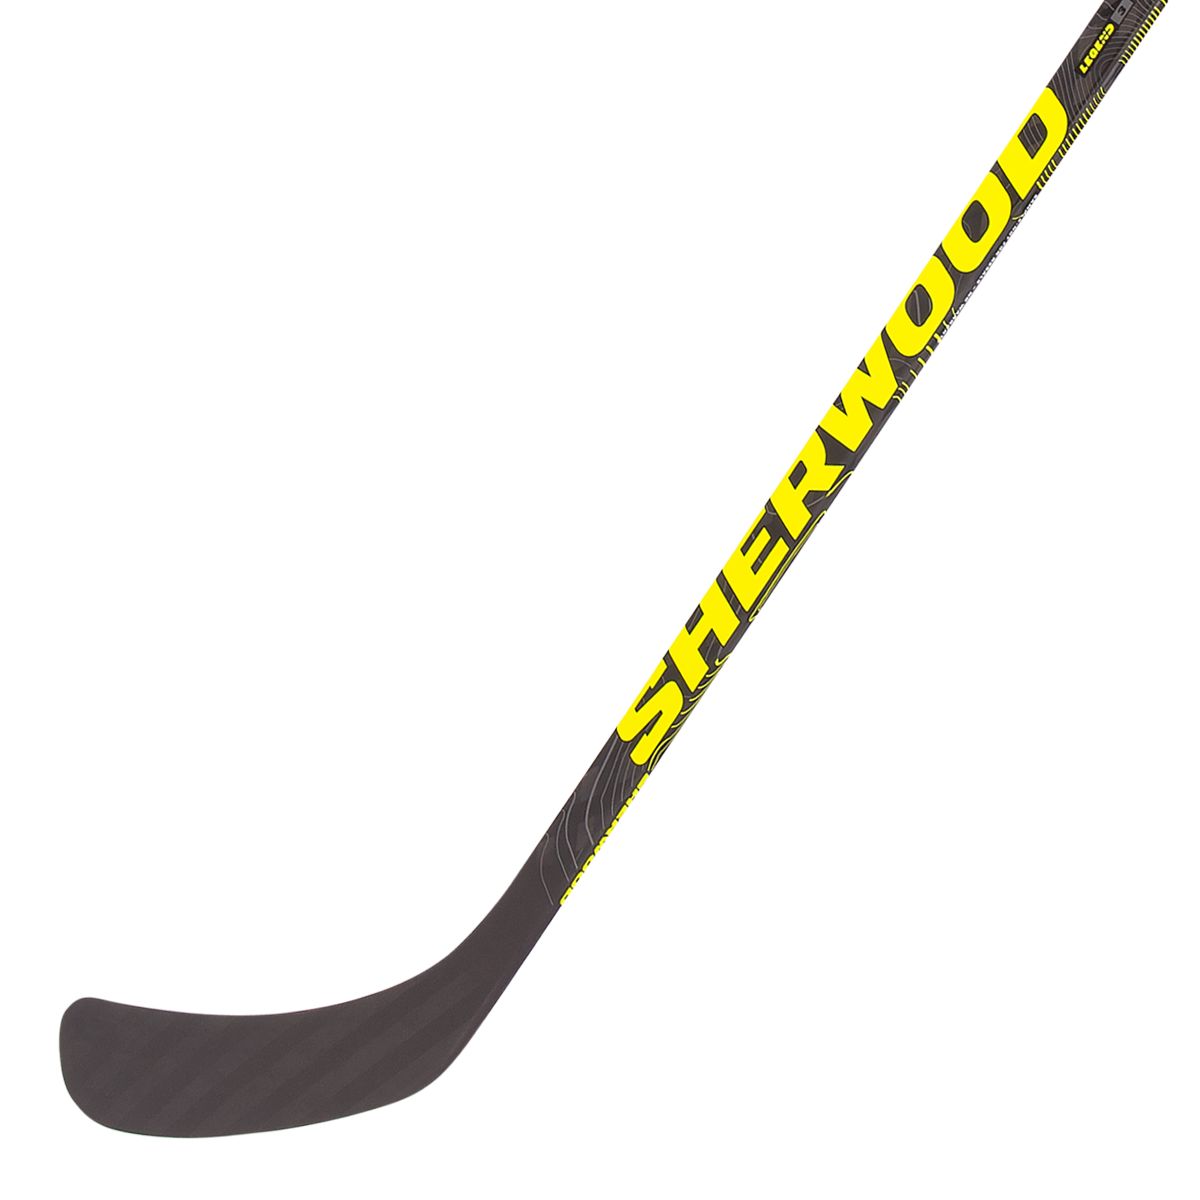 Image of Sherwood Rekker Legend 3 Senior Hockey Stick